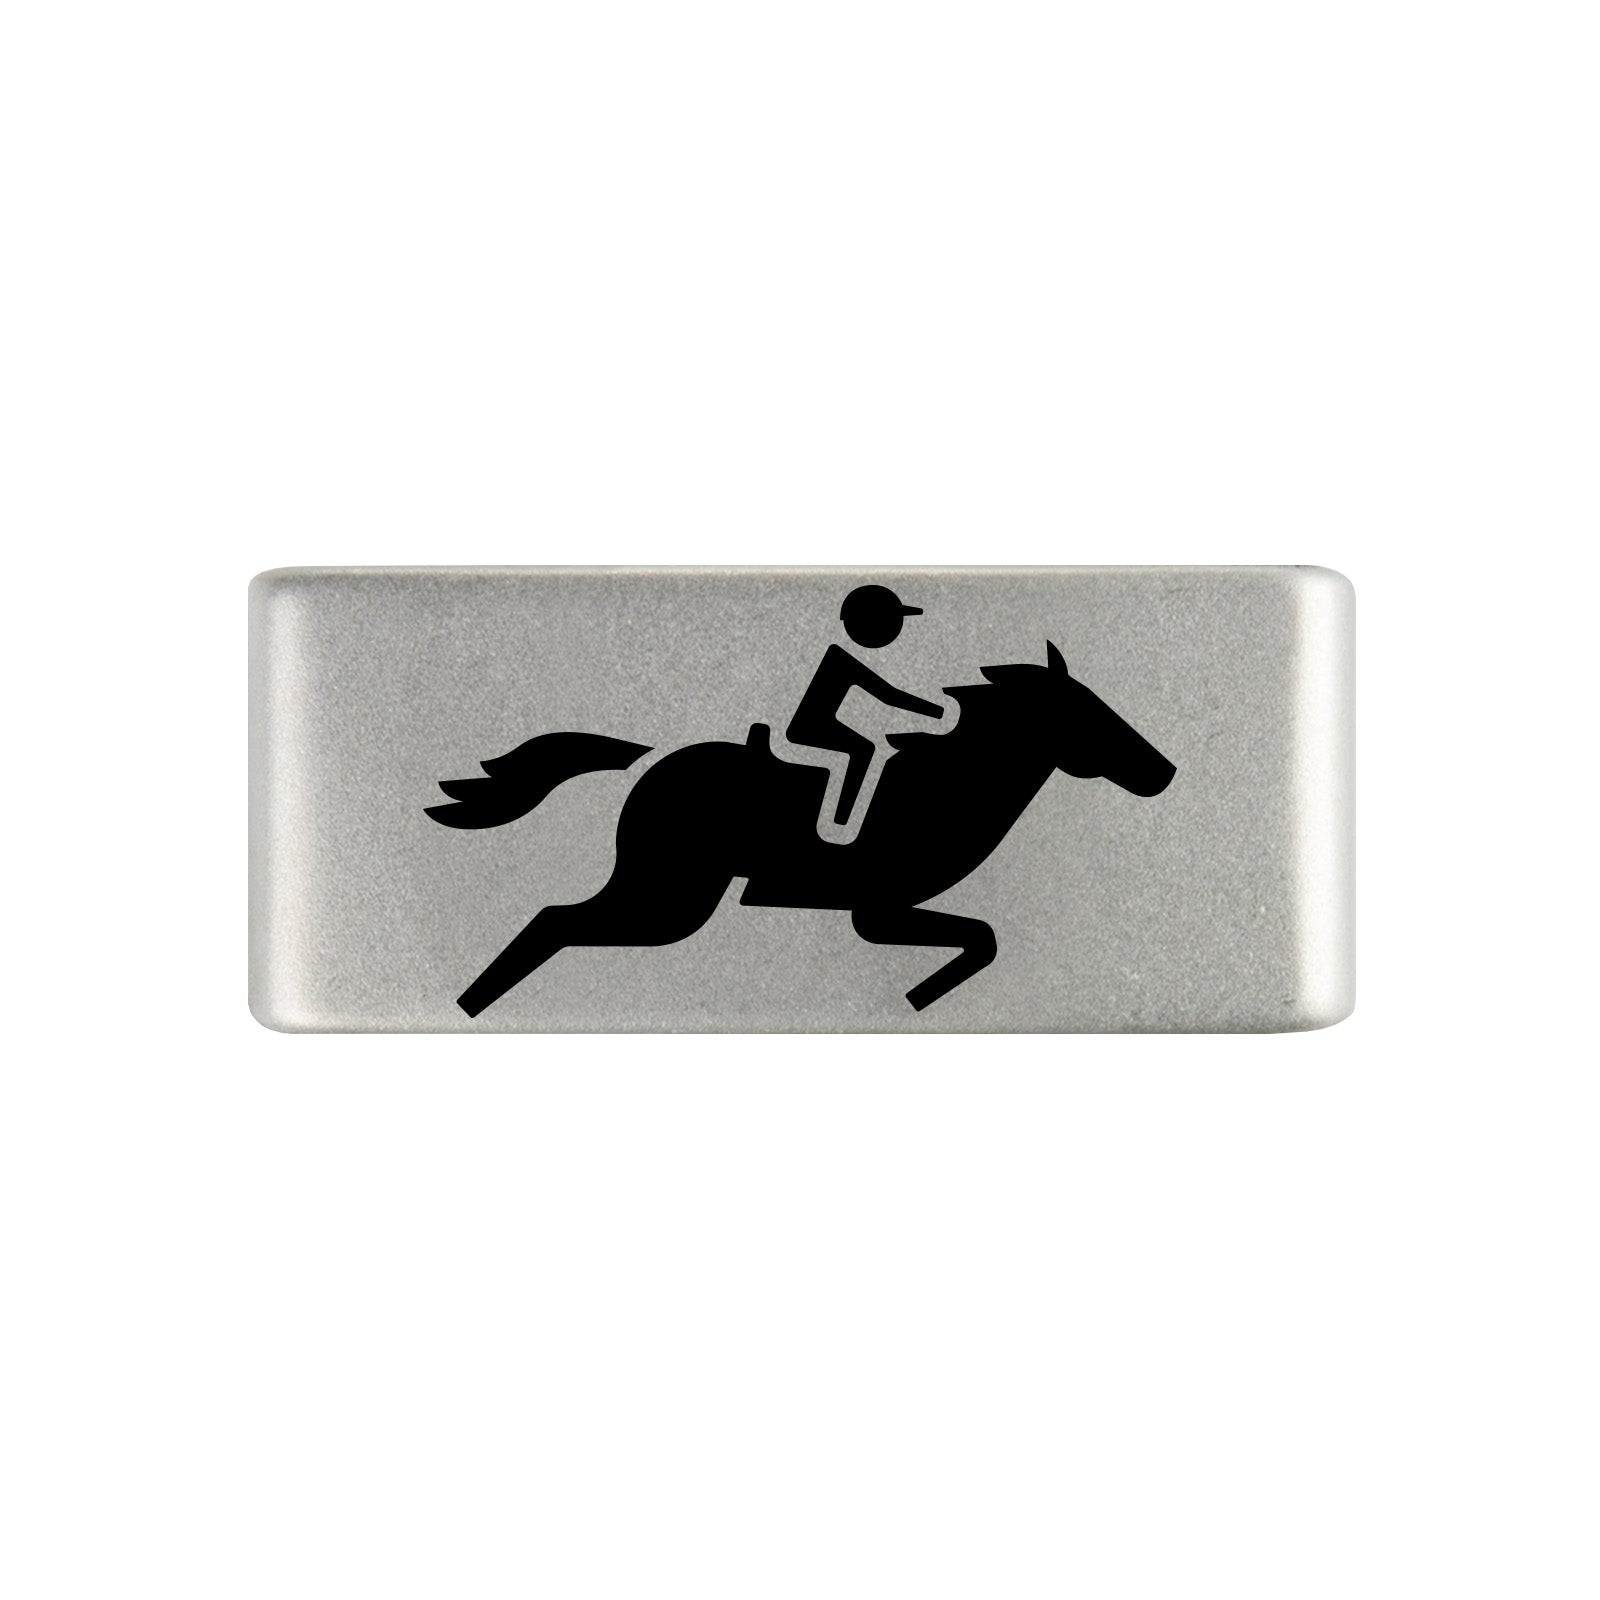 Horseback Badge Badge 13mm - ROAD iD